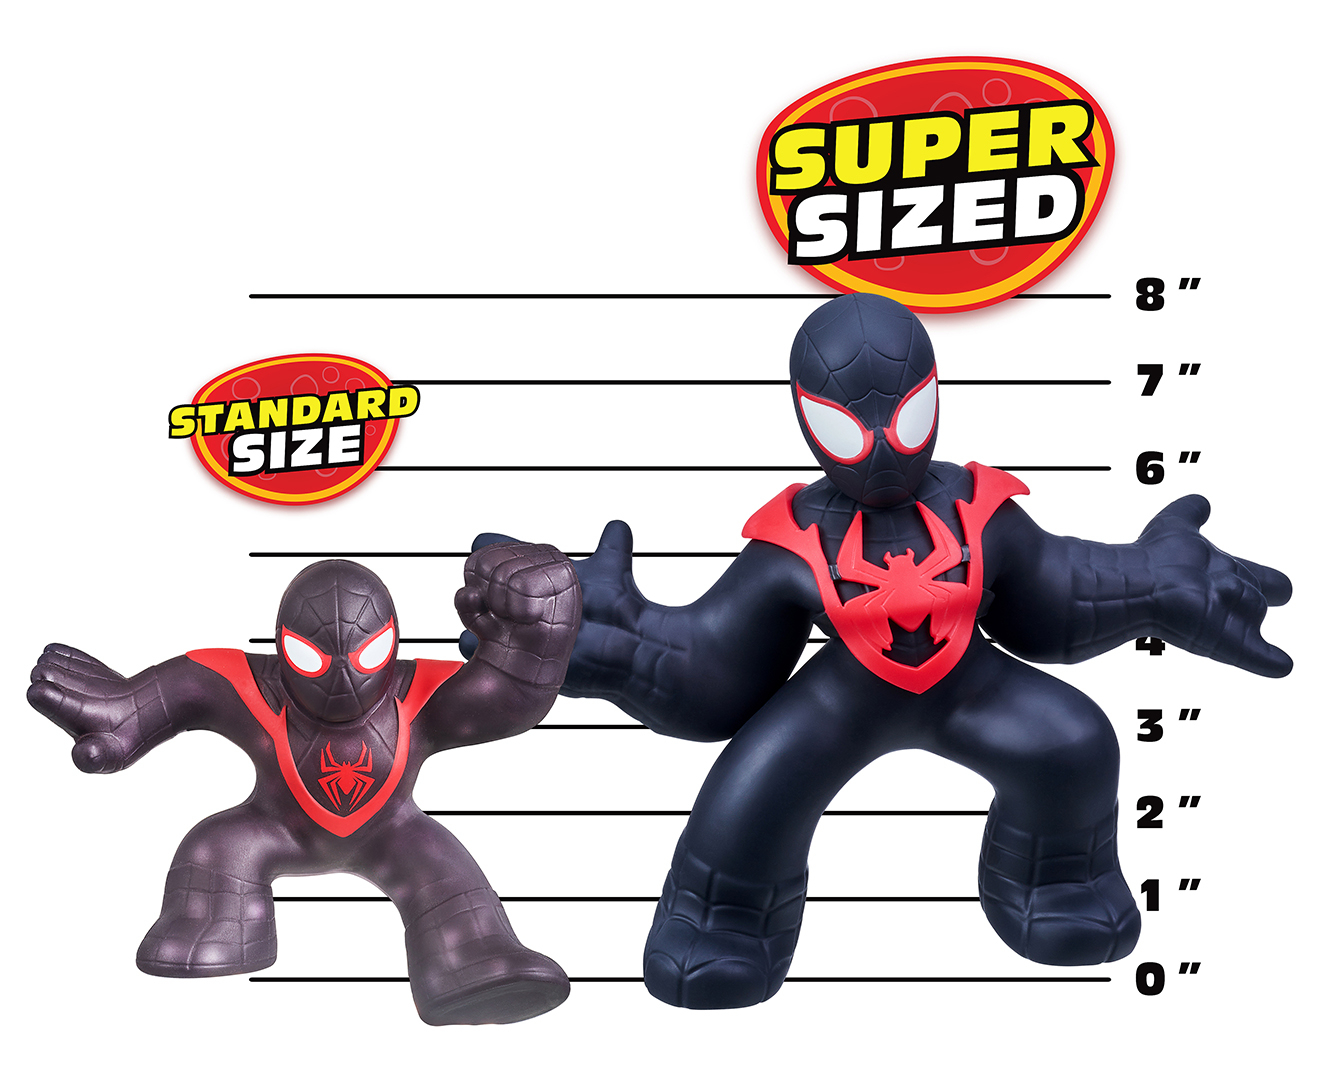 Heroes of Goo Jit Zu Marvel Versus Pack - 2 Exclusive Marvel Heroes 4.5  Tall Action Figures, Ultimate Spider-Man Versus Doctor Octopus